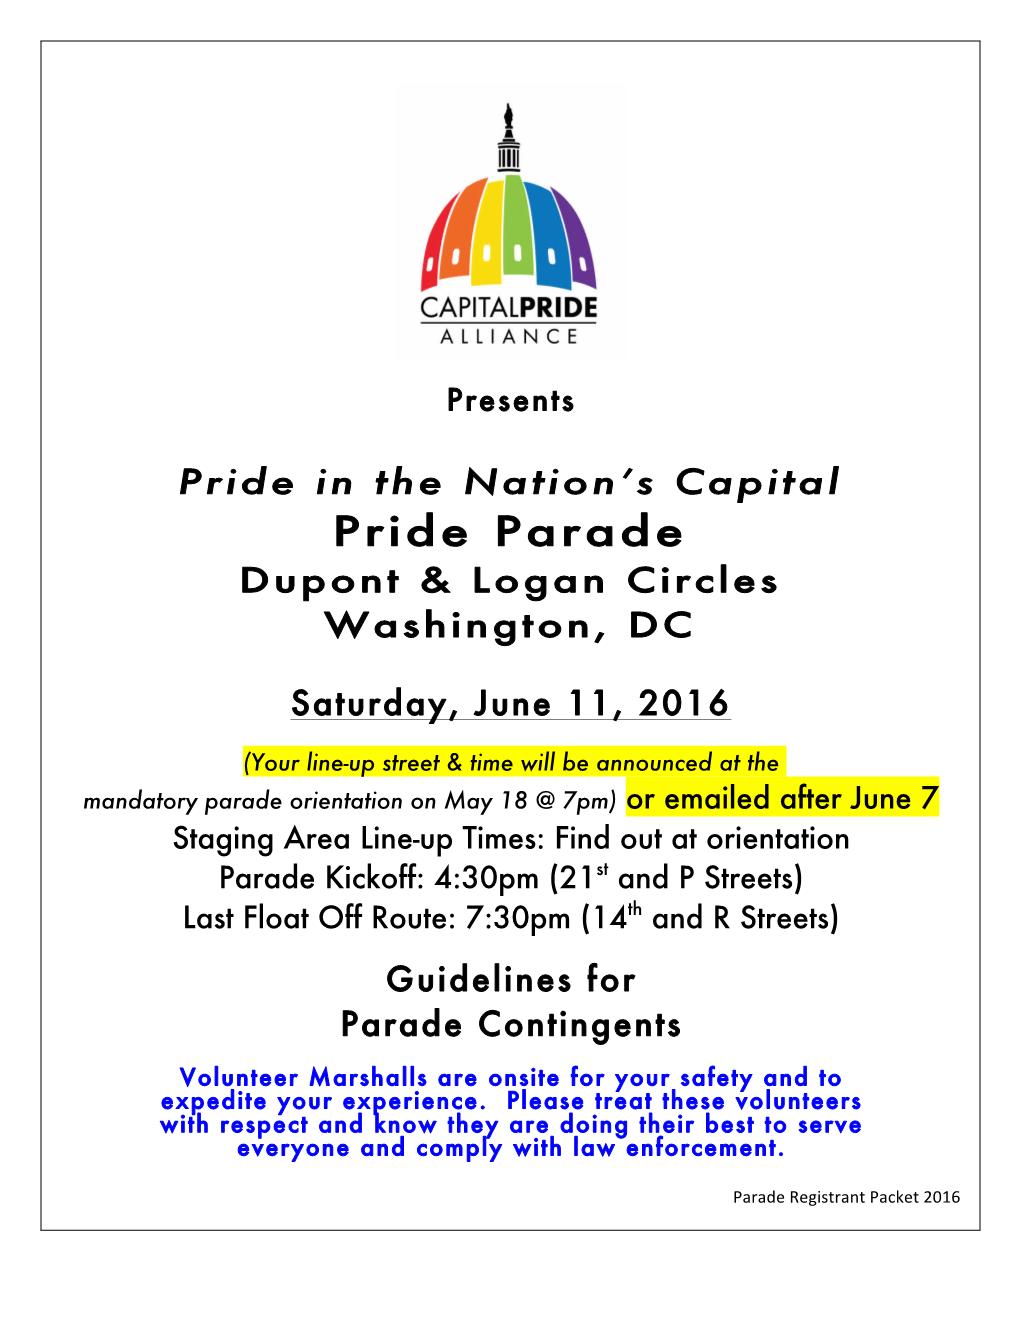 Pride Parade Dupont & Logan Circles Washington, DC